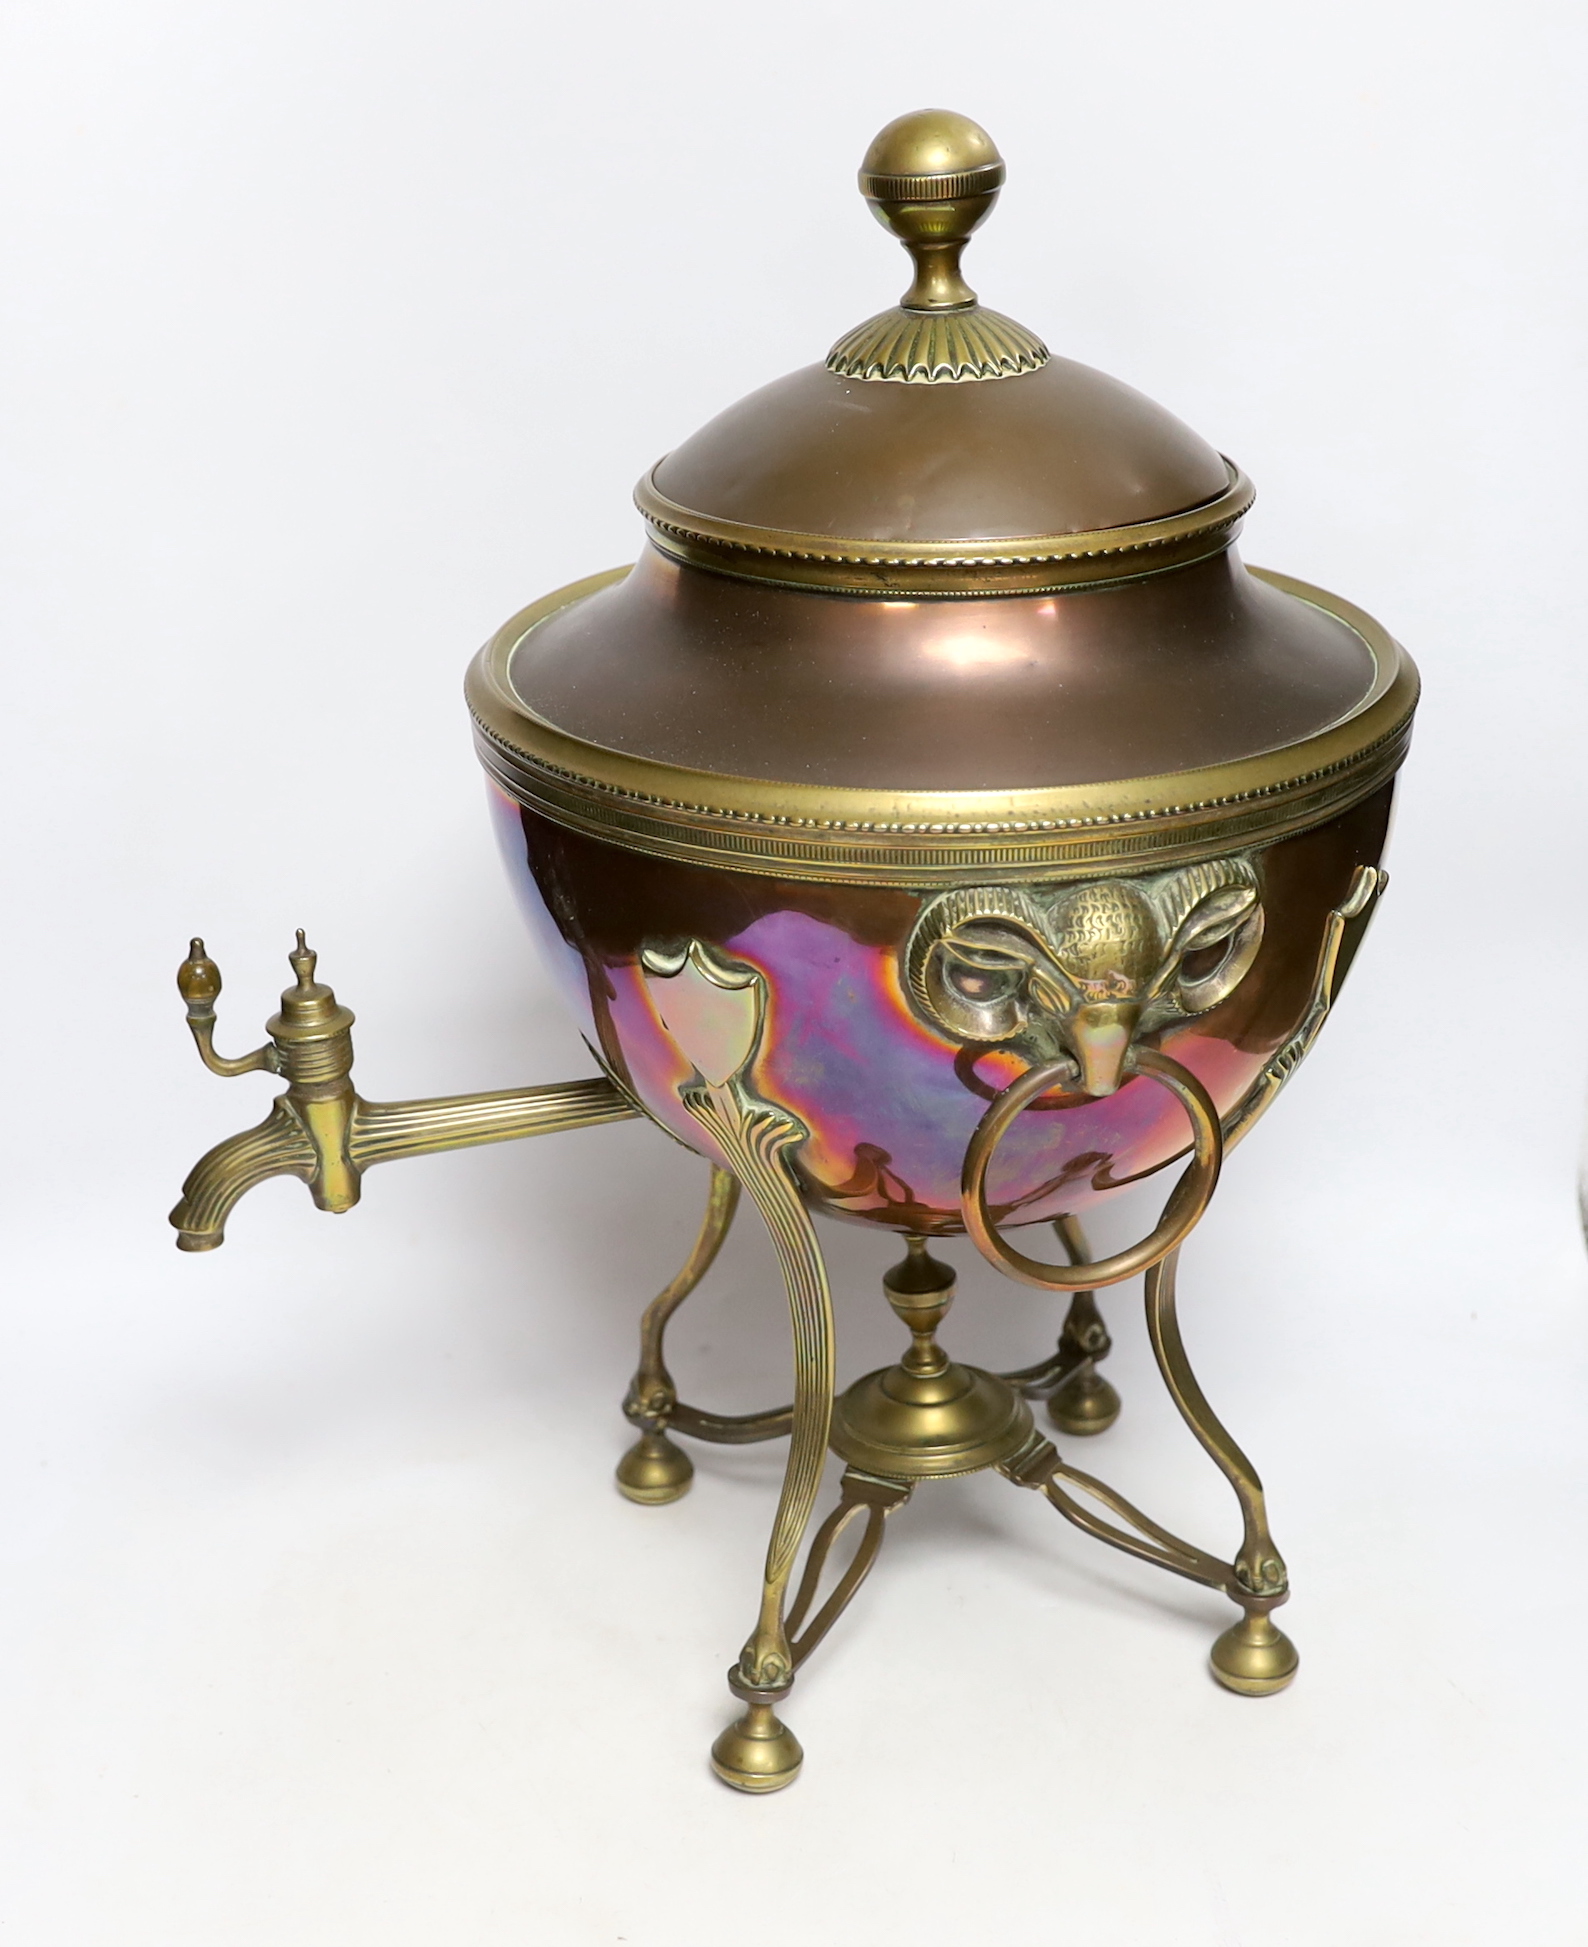 A Regency copper and brass tea urn, 46cm high